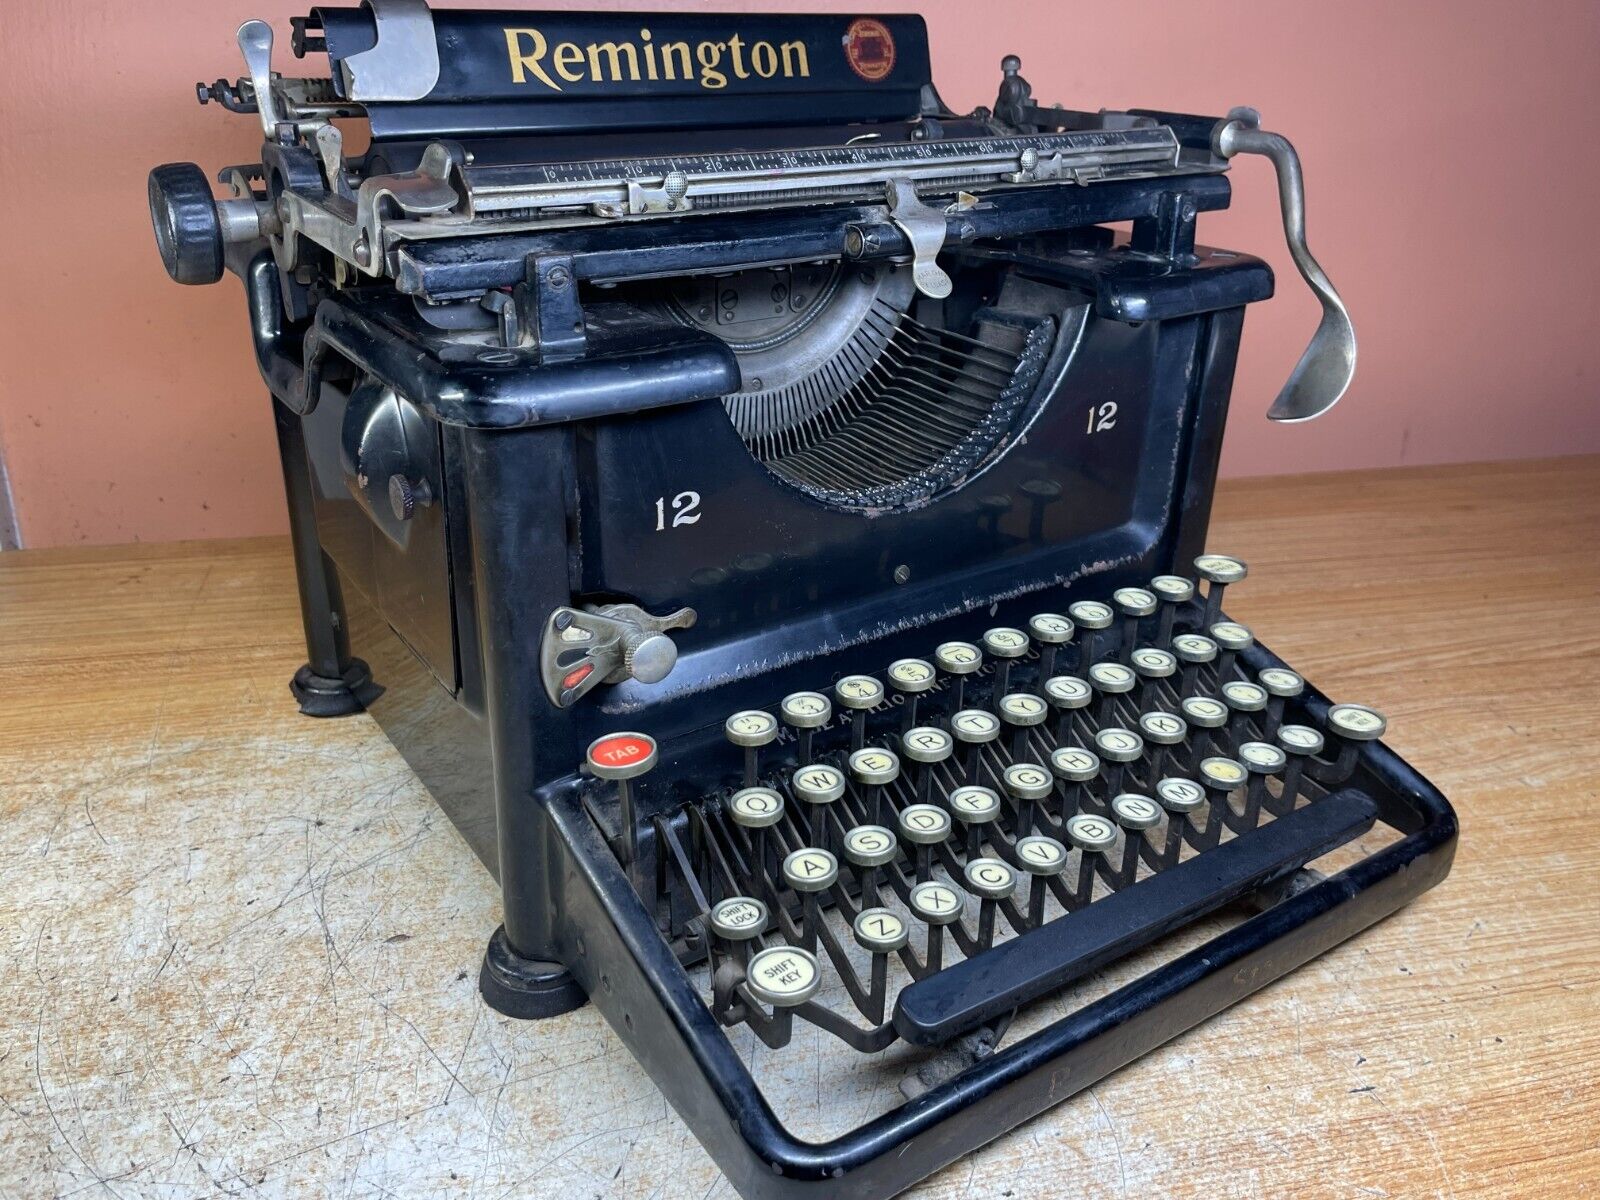 1926 Remington 12 Working Antique Typewriter w New Ink